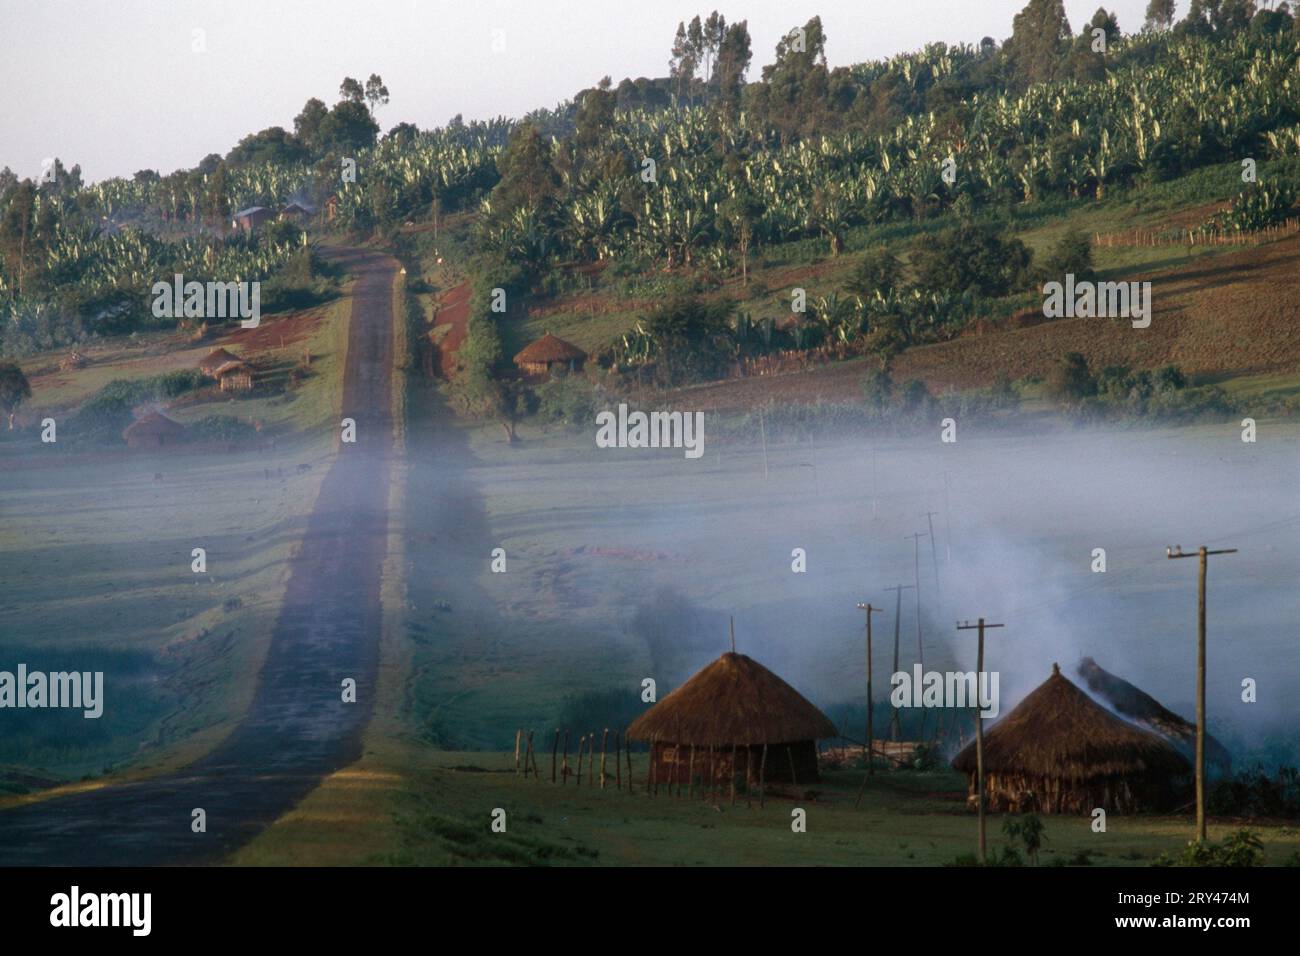 Banana plantation, Awasa, highlands, Ethiopia Stock Photo